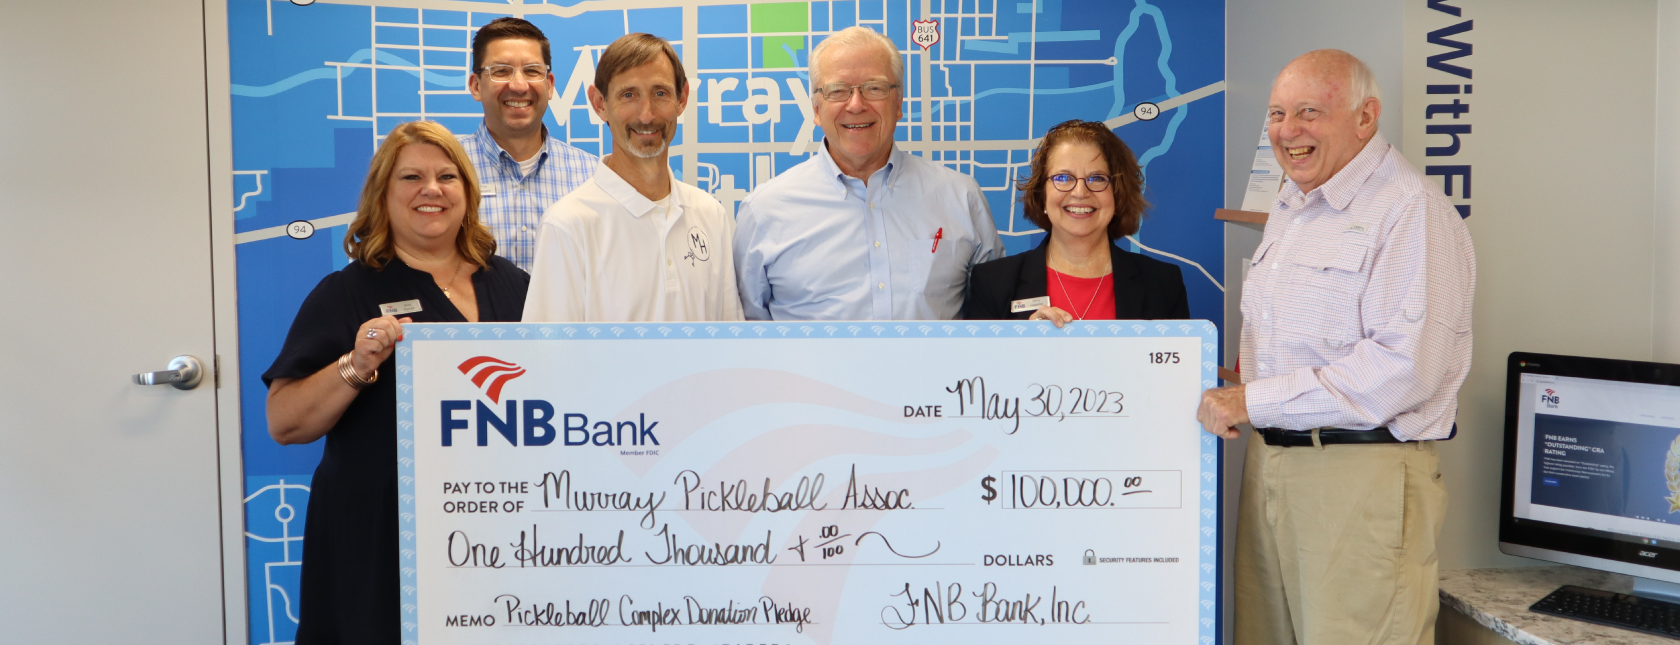 FNB Bank Donates to Murray Pickleball Association